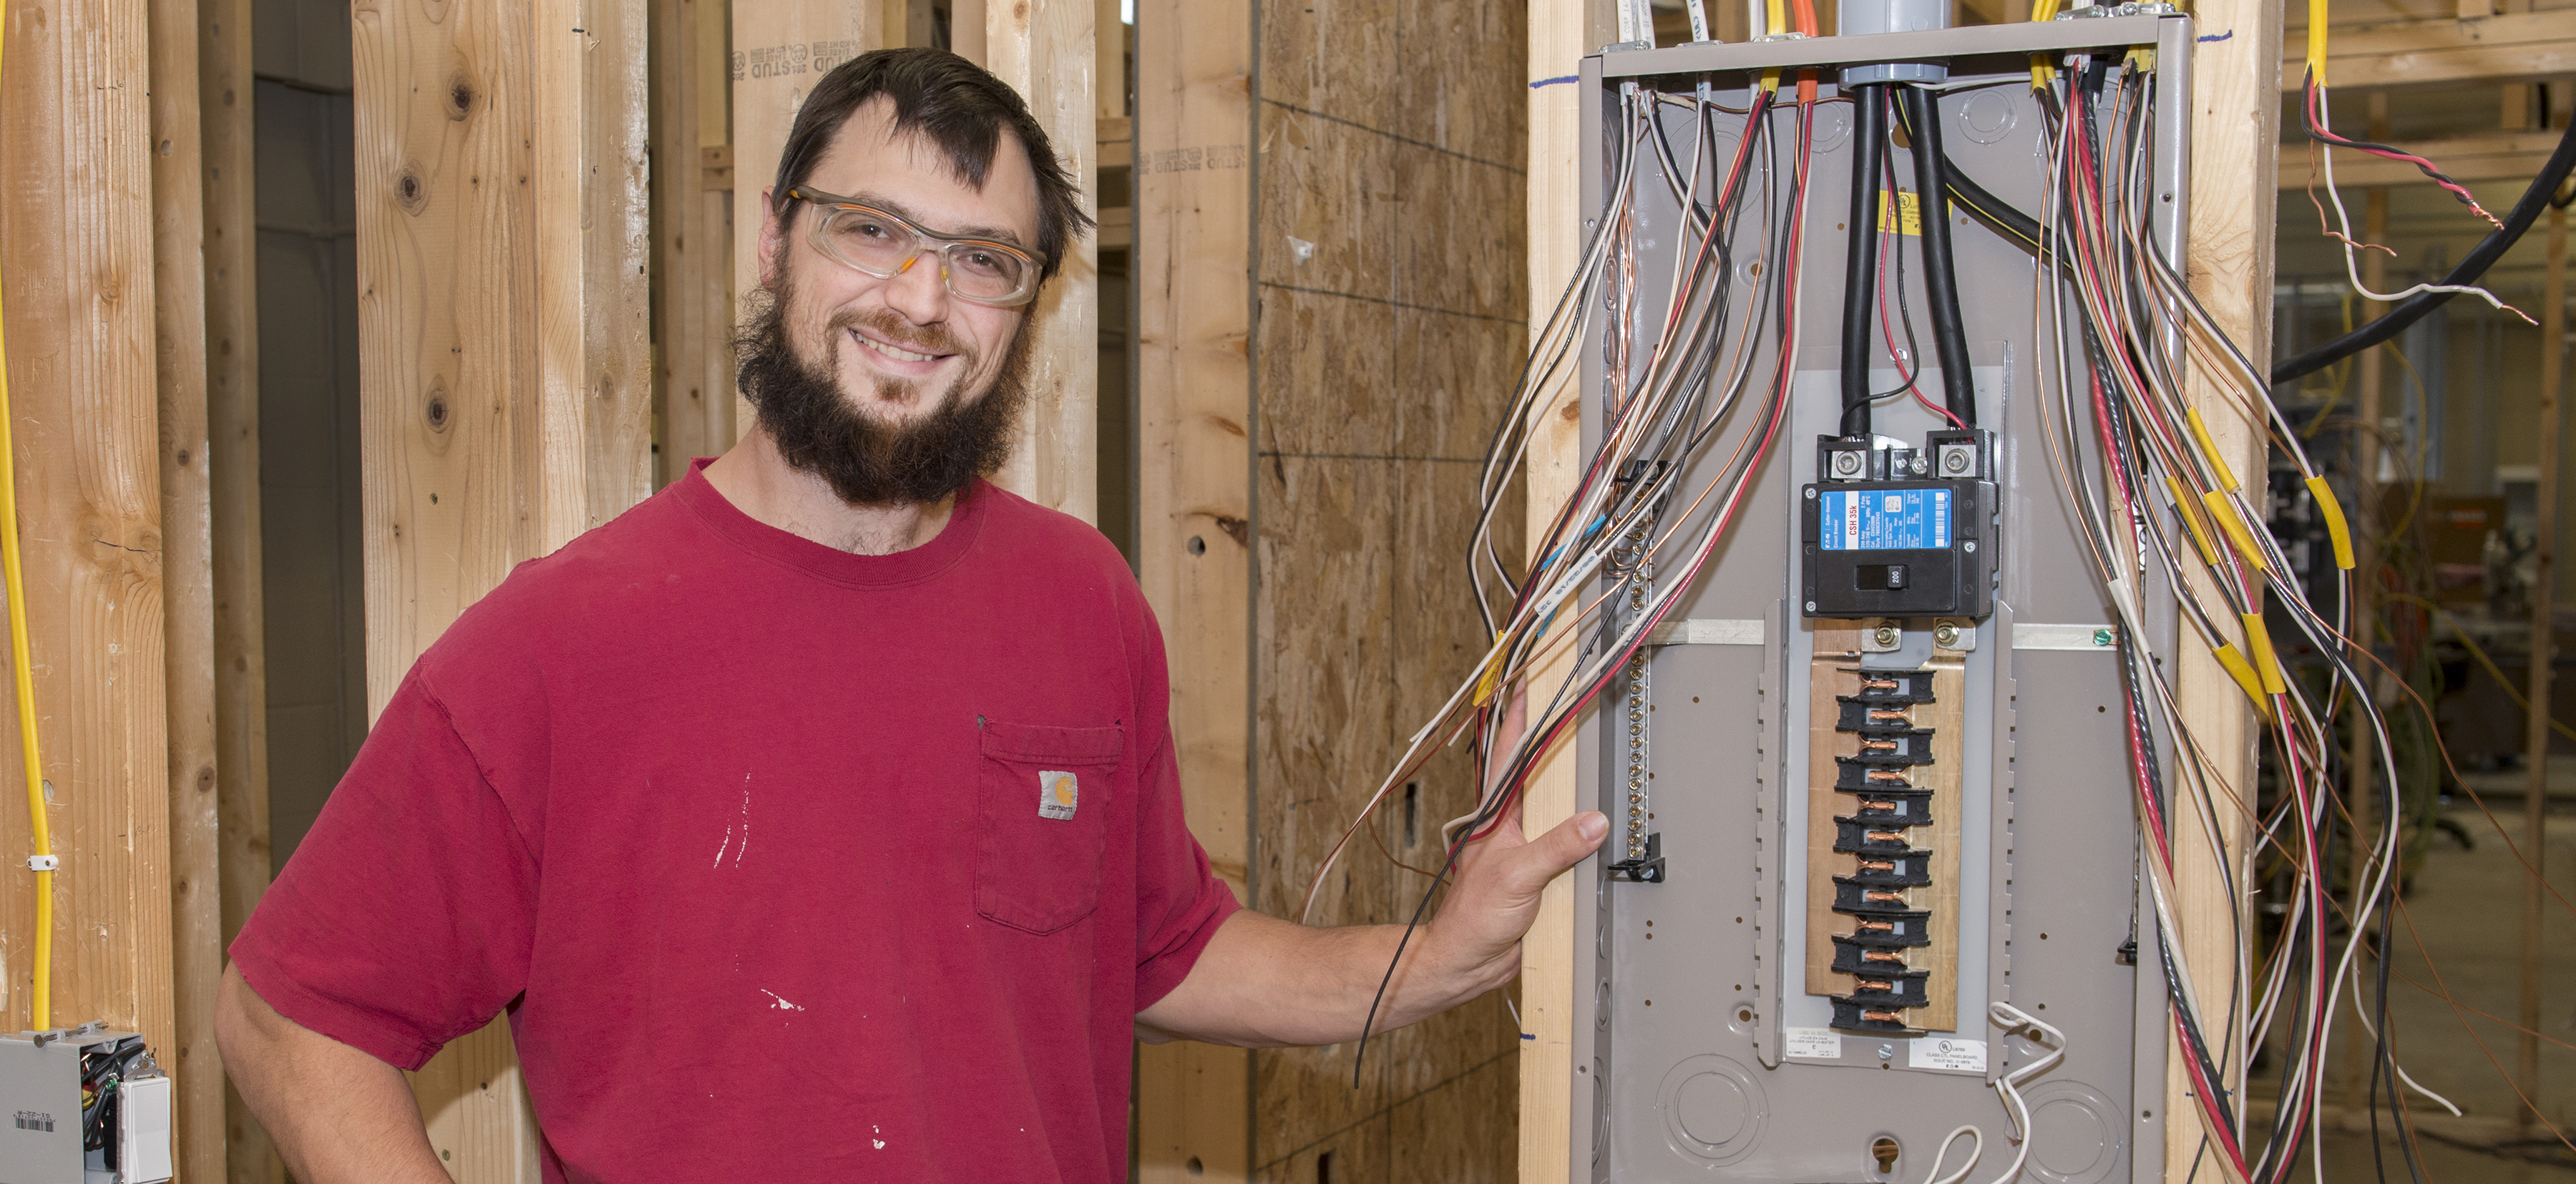 Shawn Graupmann standing next to an electrical box